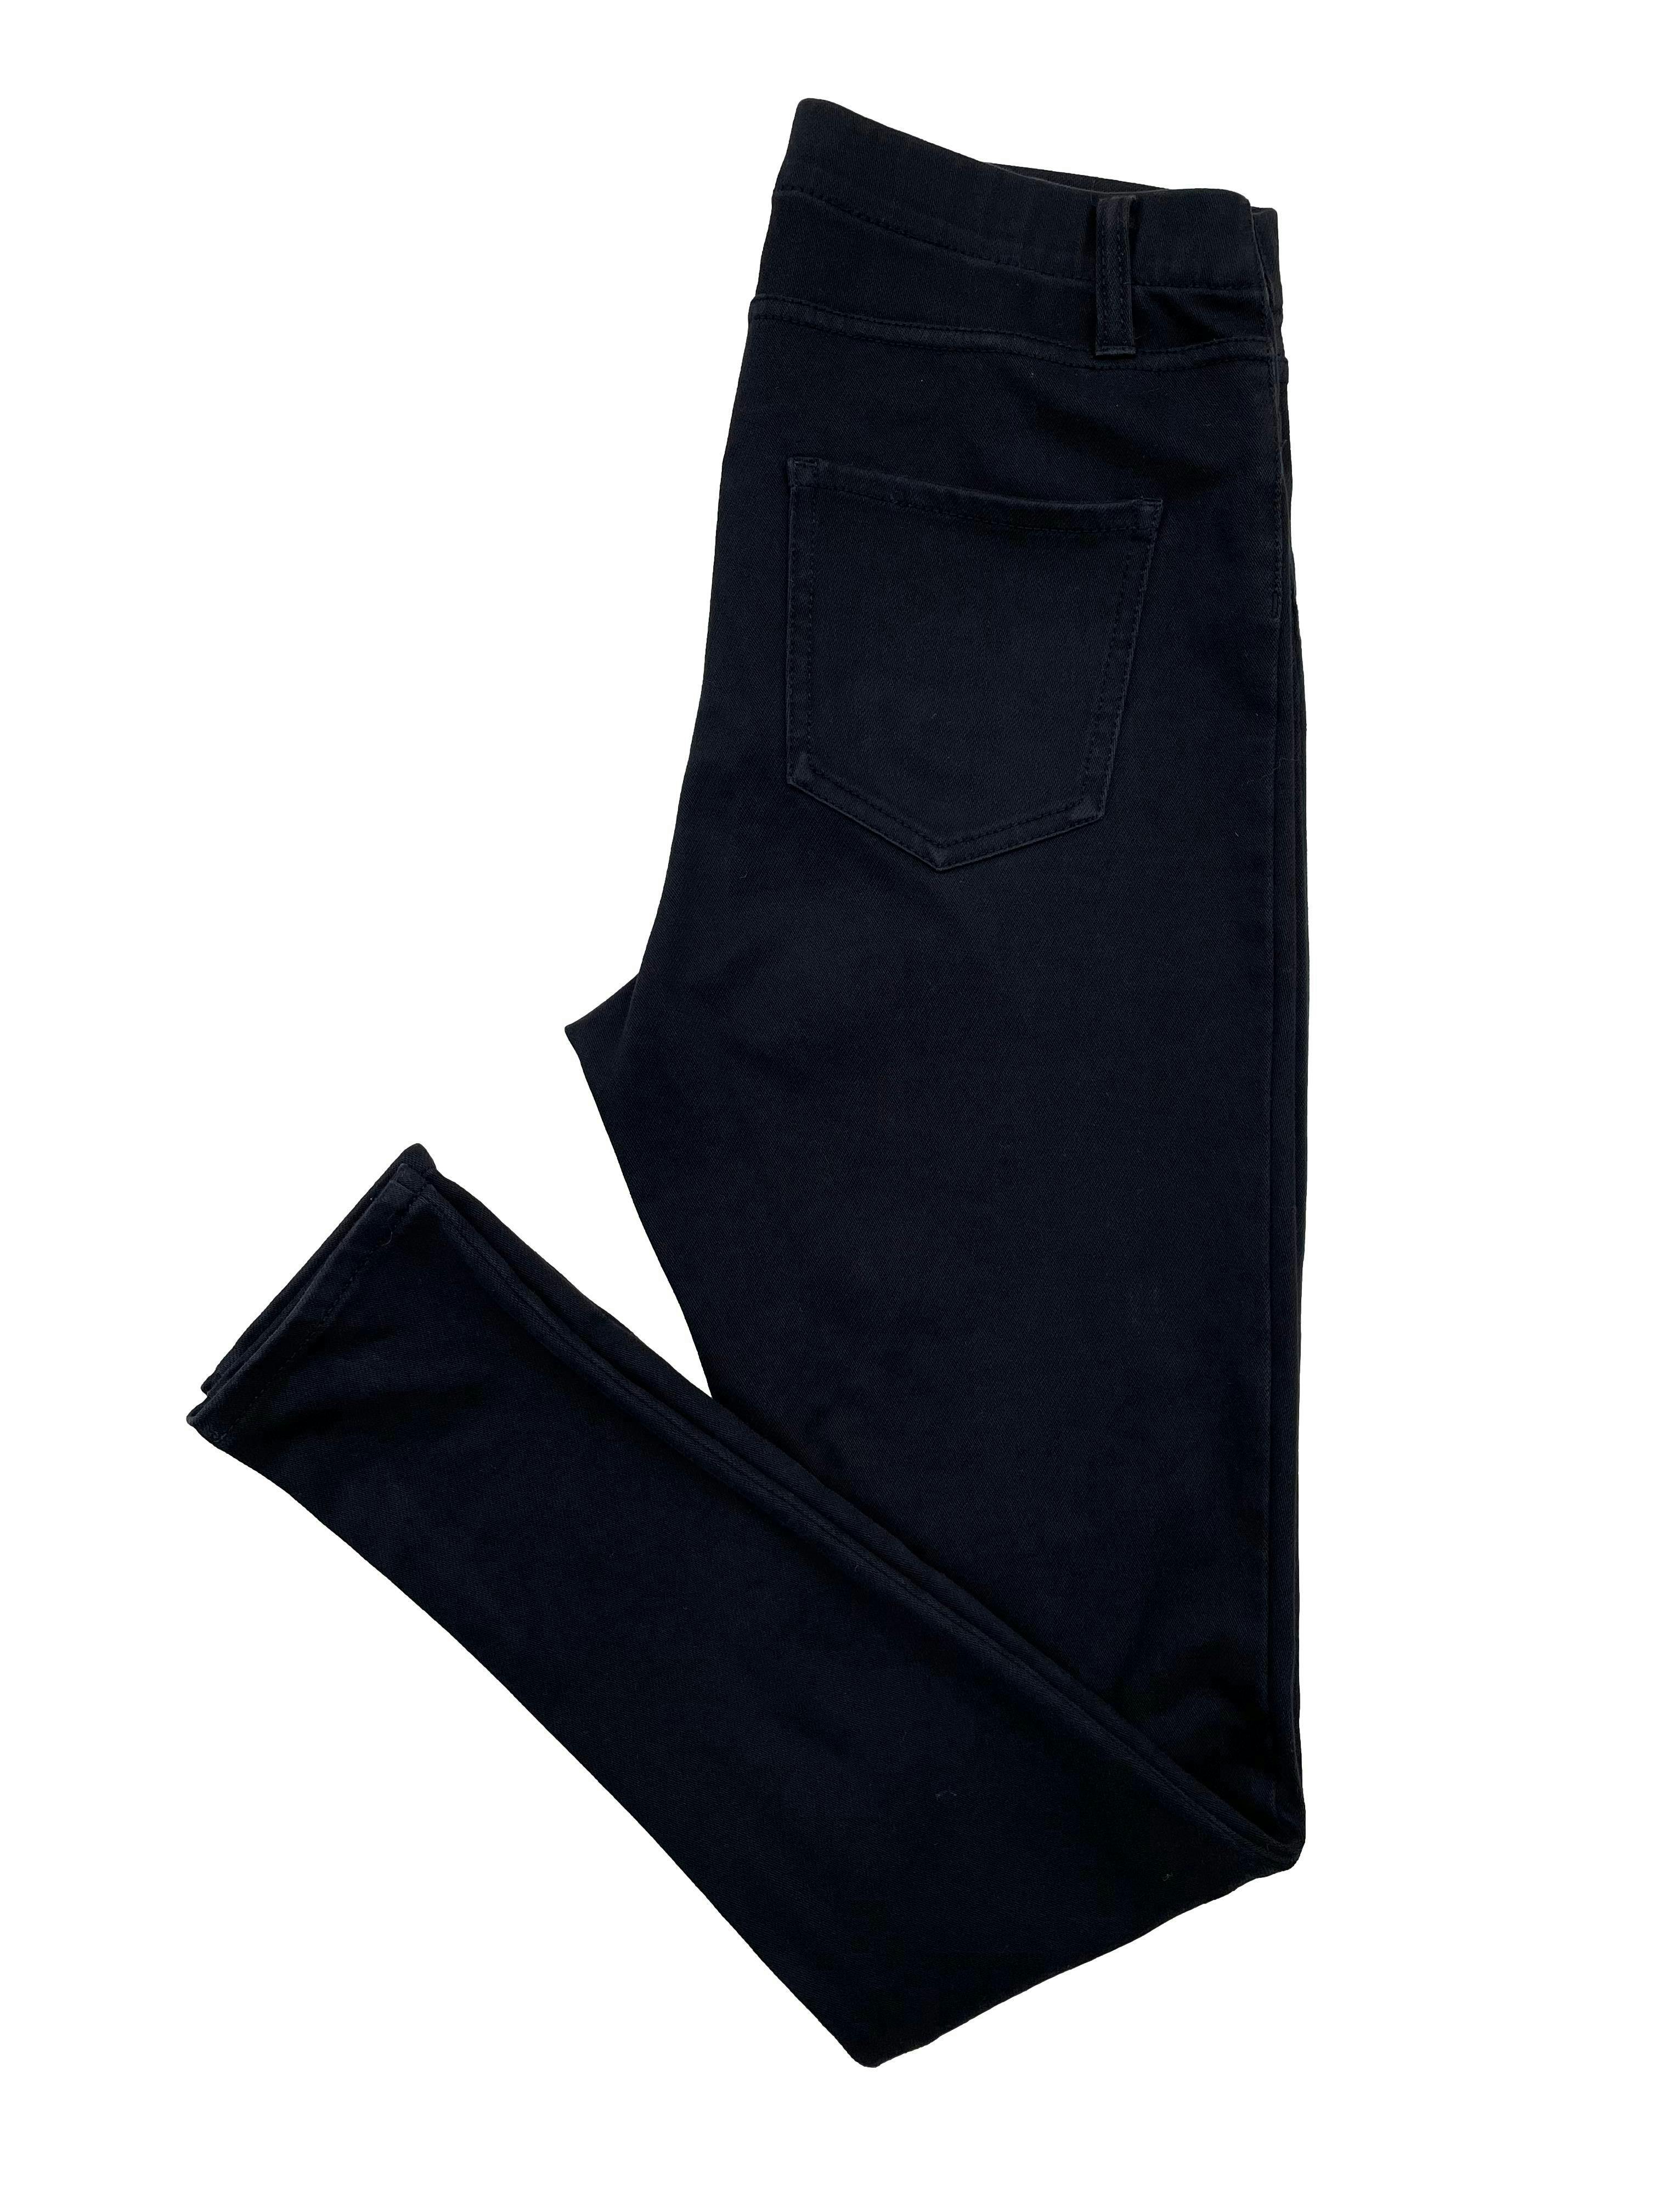 Jeggings negros,tela mezcla de algodón, con bolsillos posteriores. Cintura 74cm, Tiro 25cm, Largo 95cm.